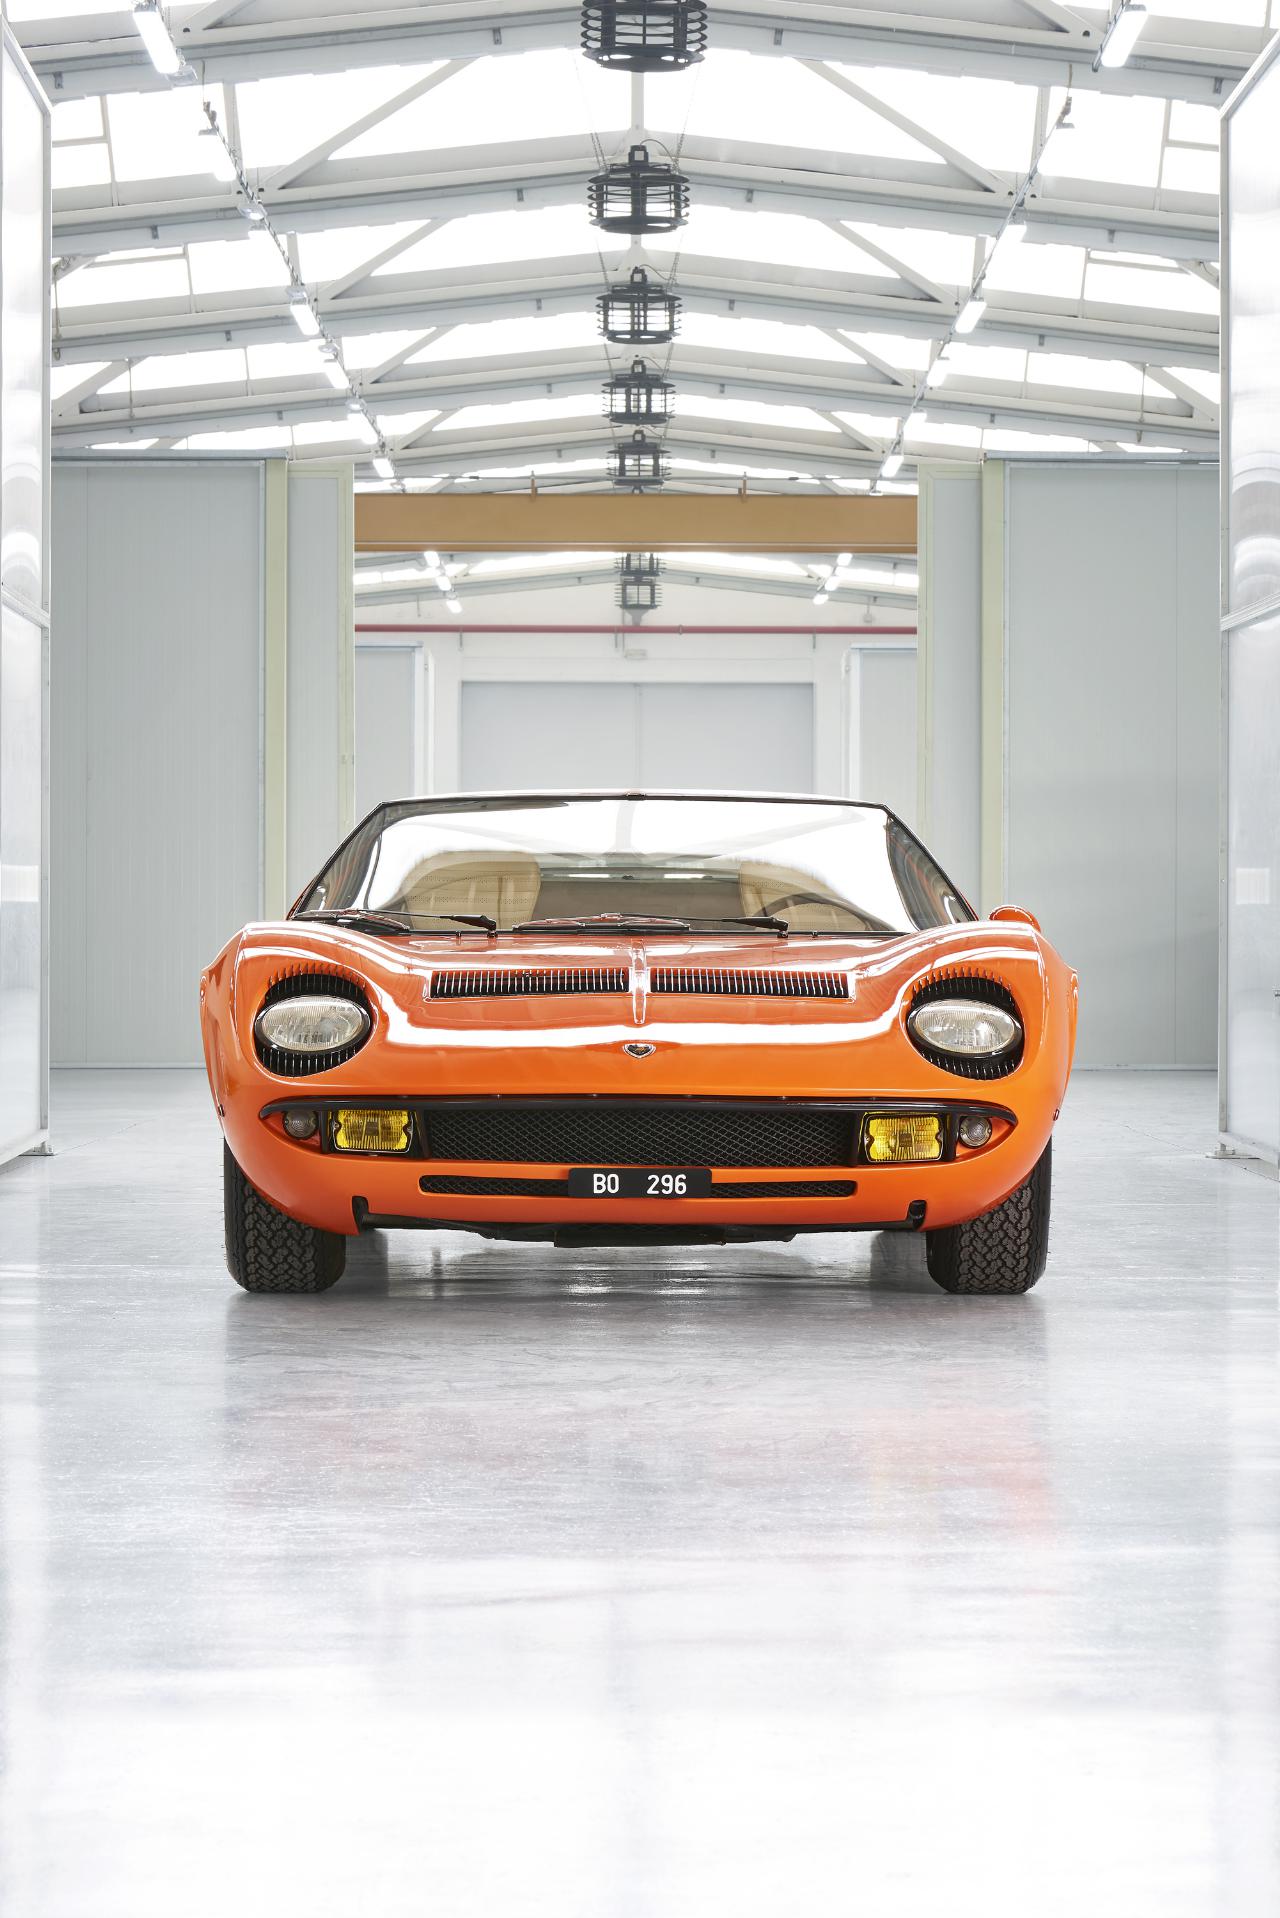 Este é o Lamborghini Miura original de “The Italian Job”